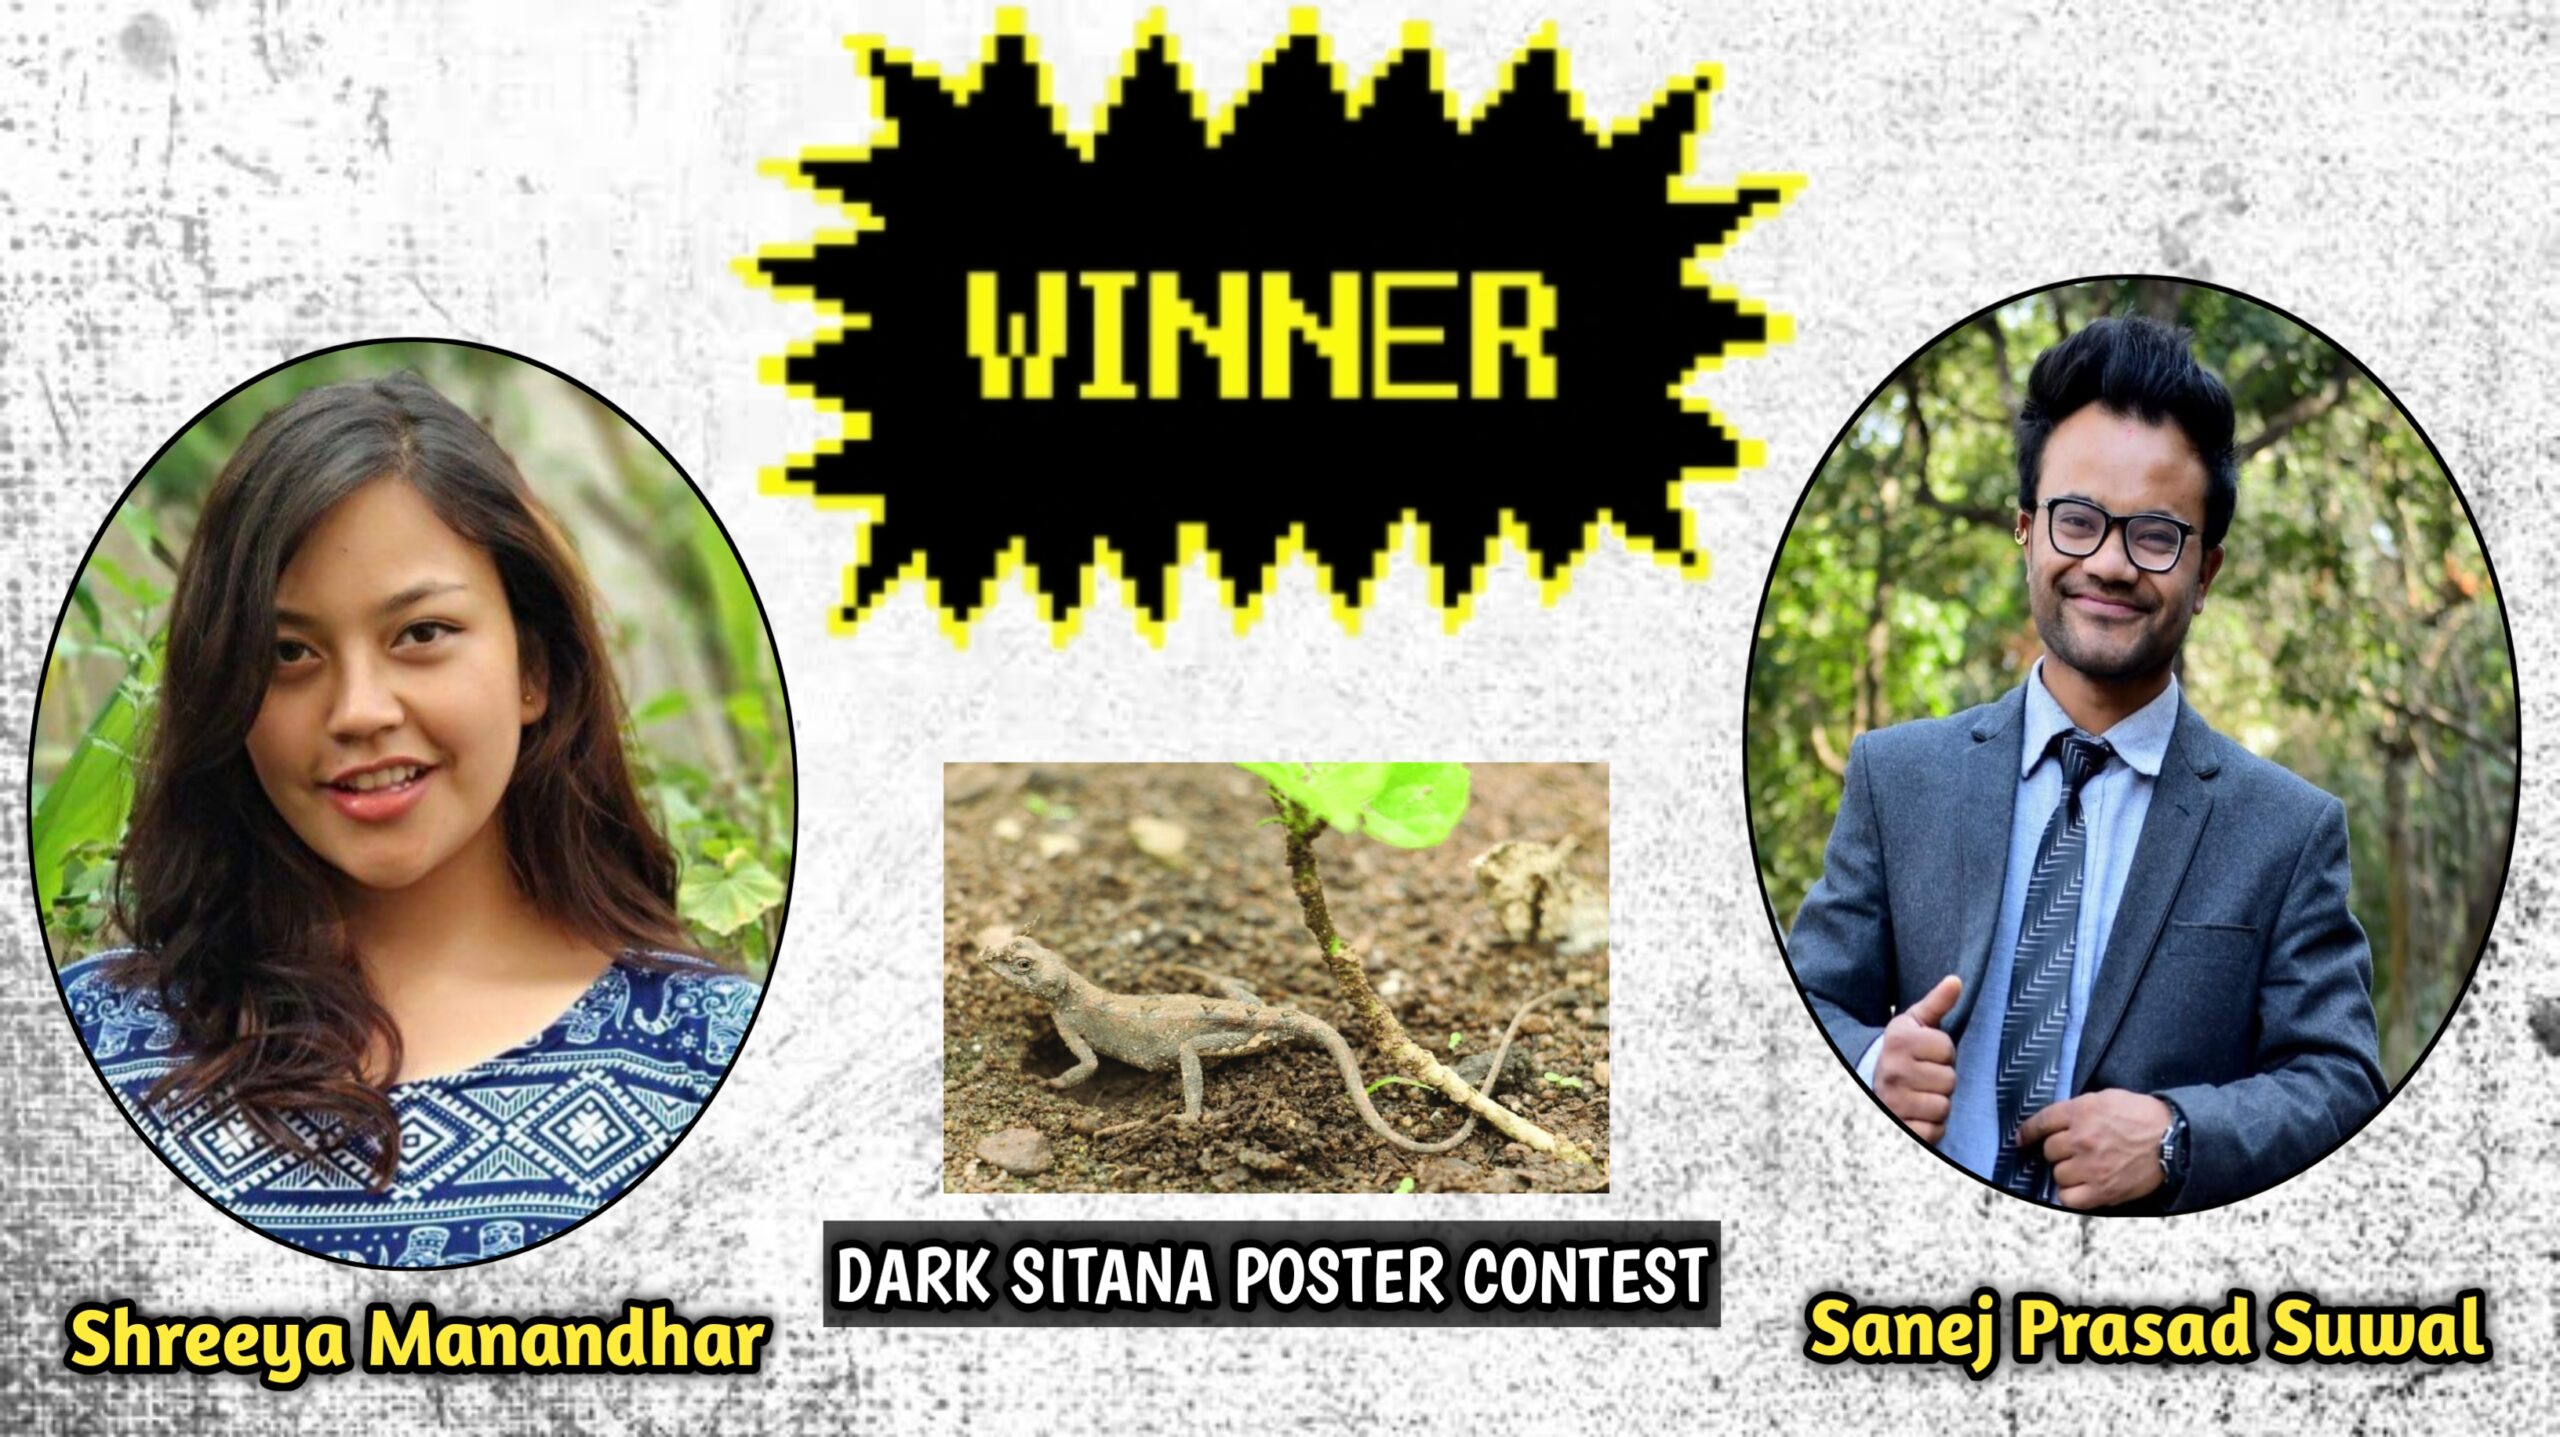 Dark sitana poster contestants awarded